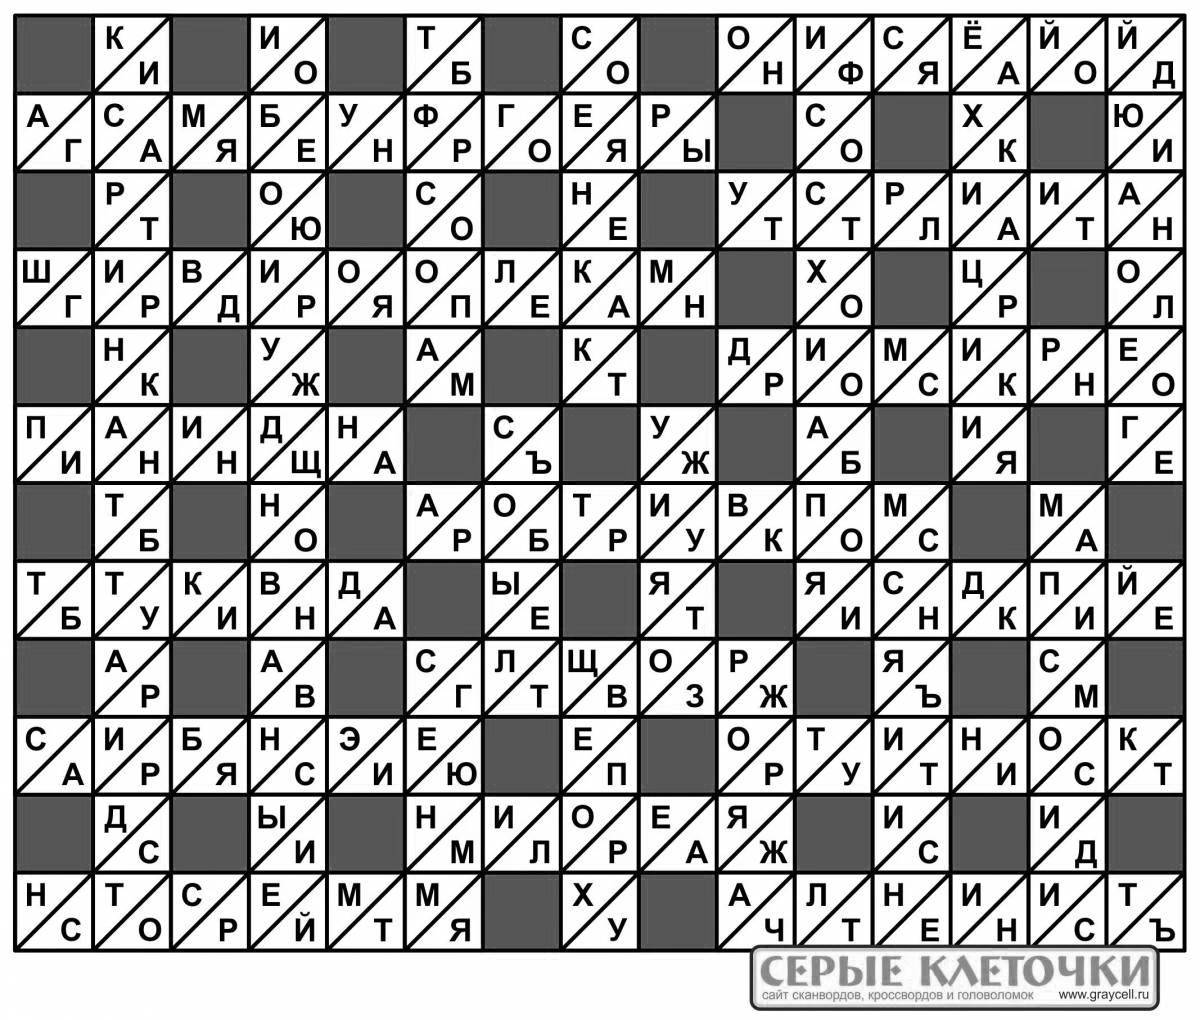 Detailed lyceum crossword puzzle